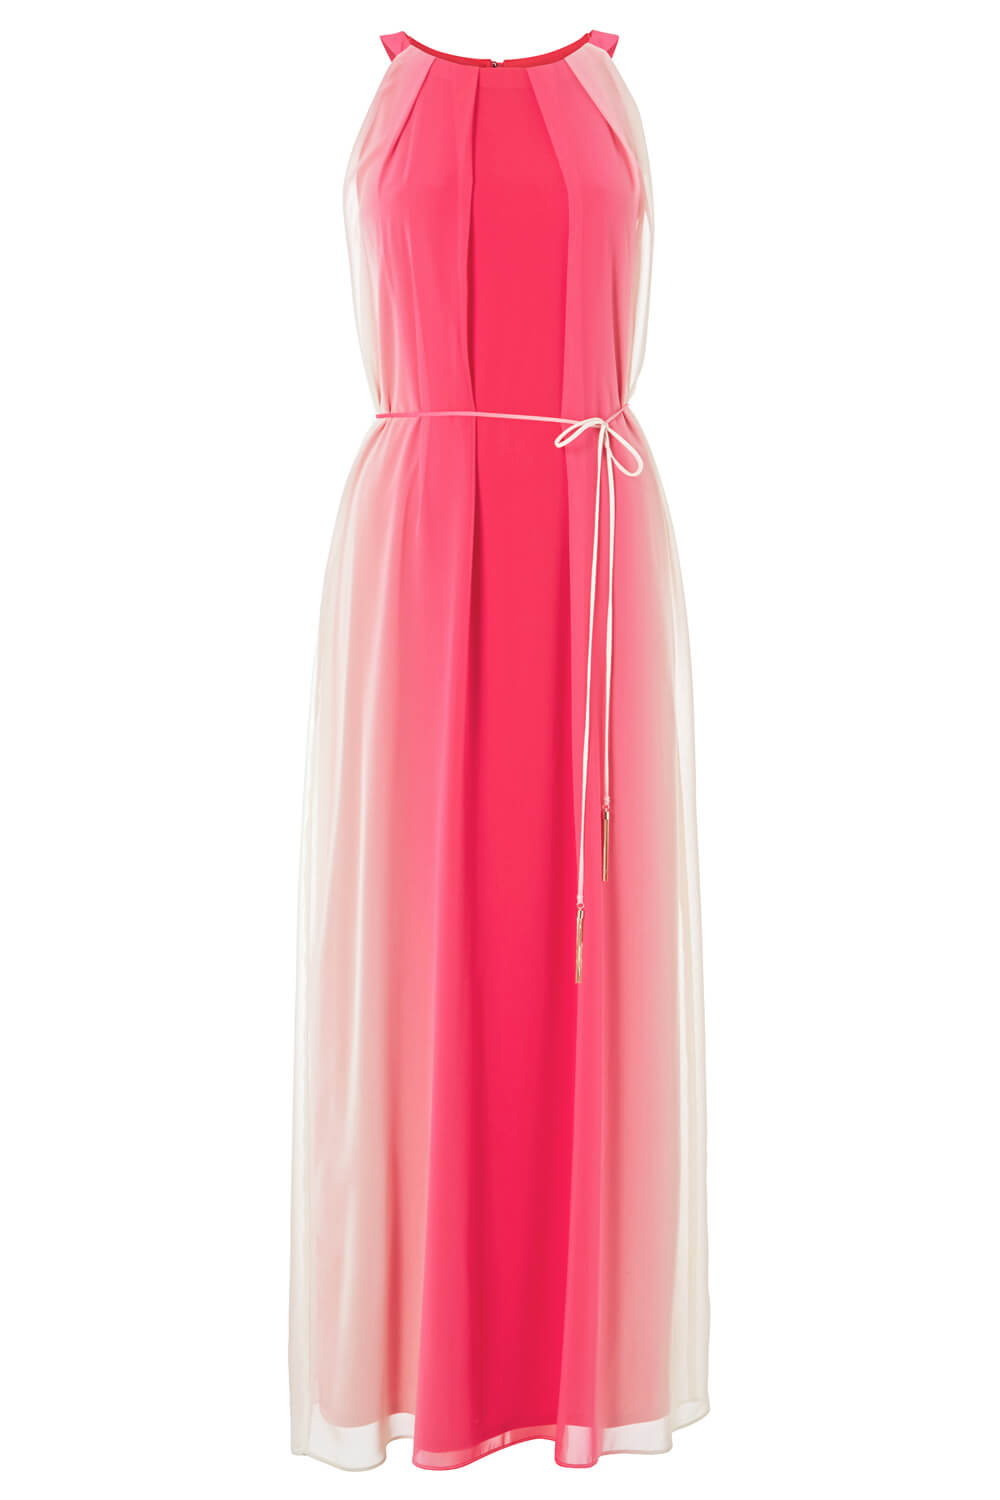 PINK Ombre Chiffon Maxi Dress, Image 4 of 4